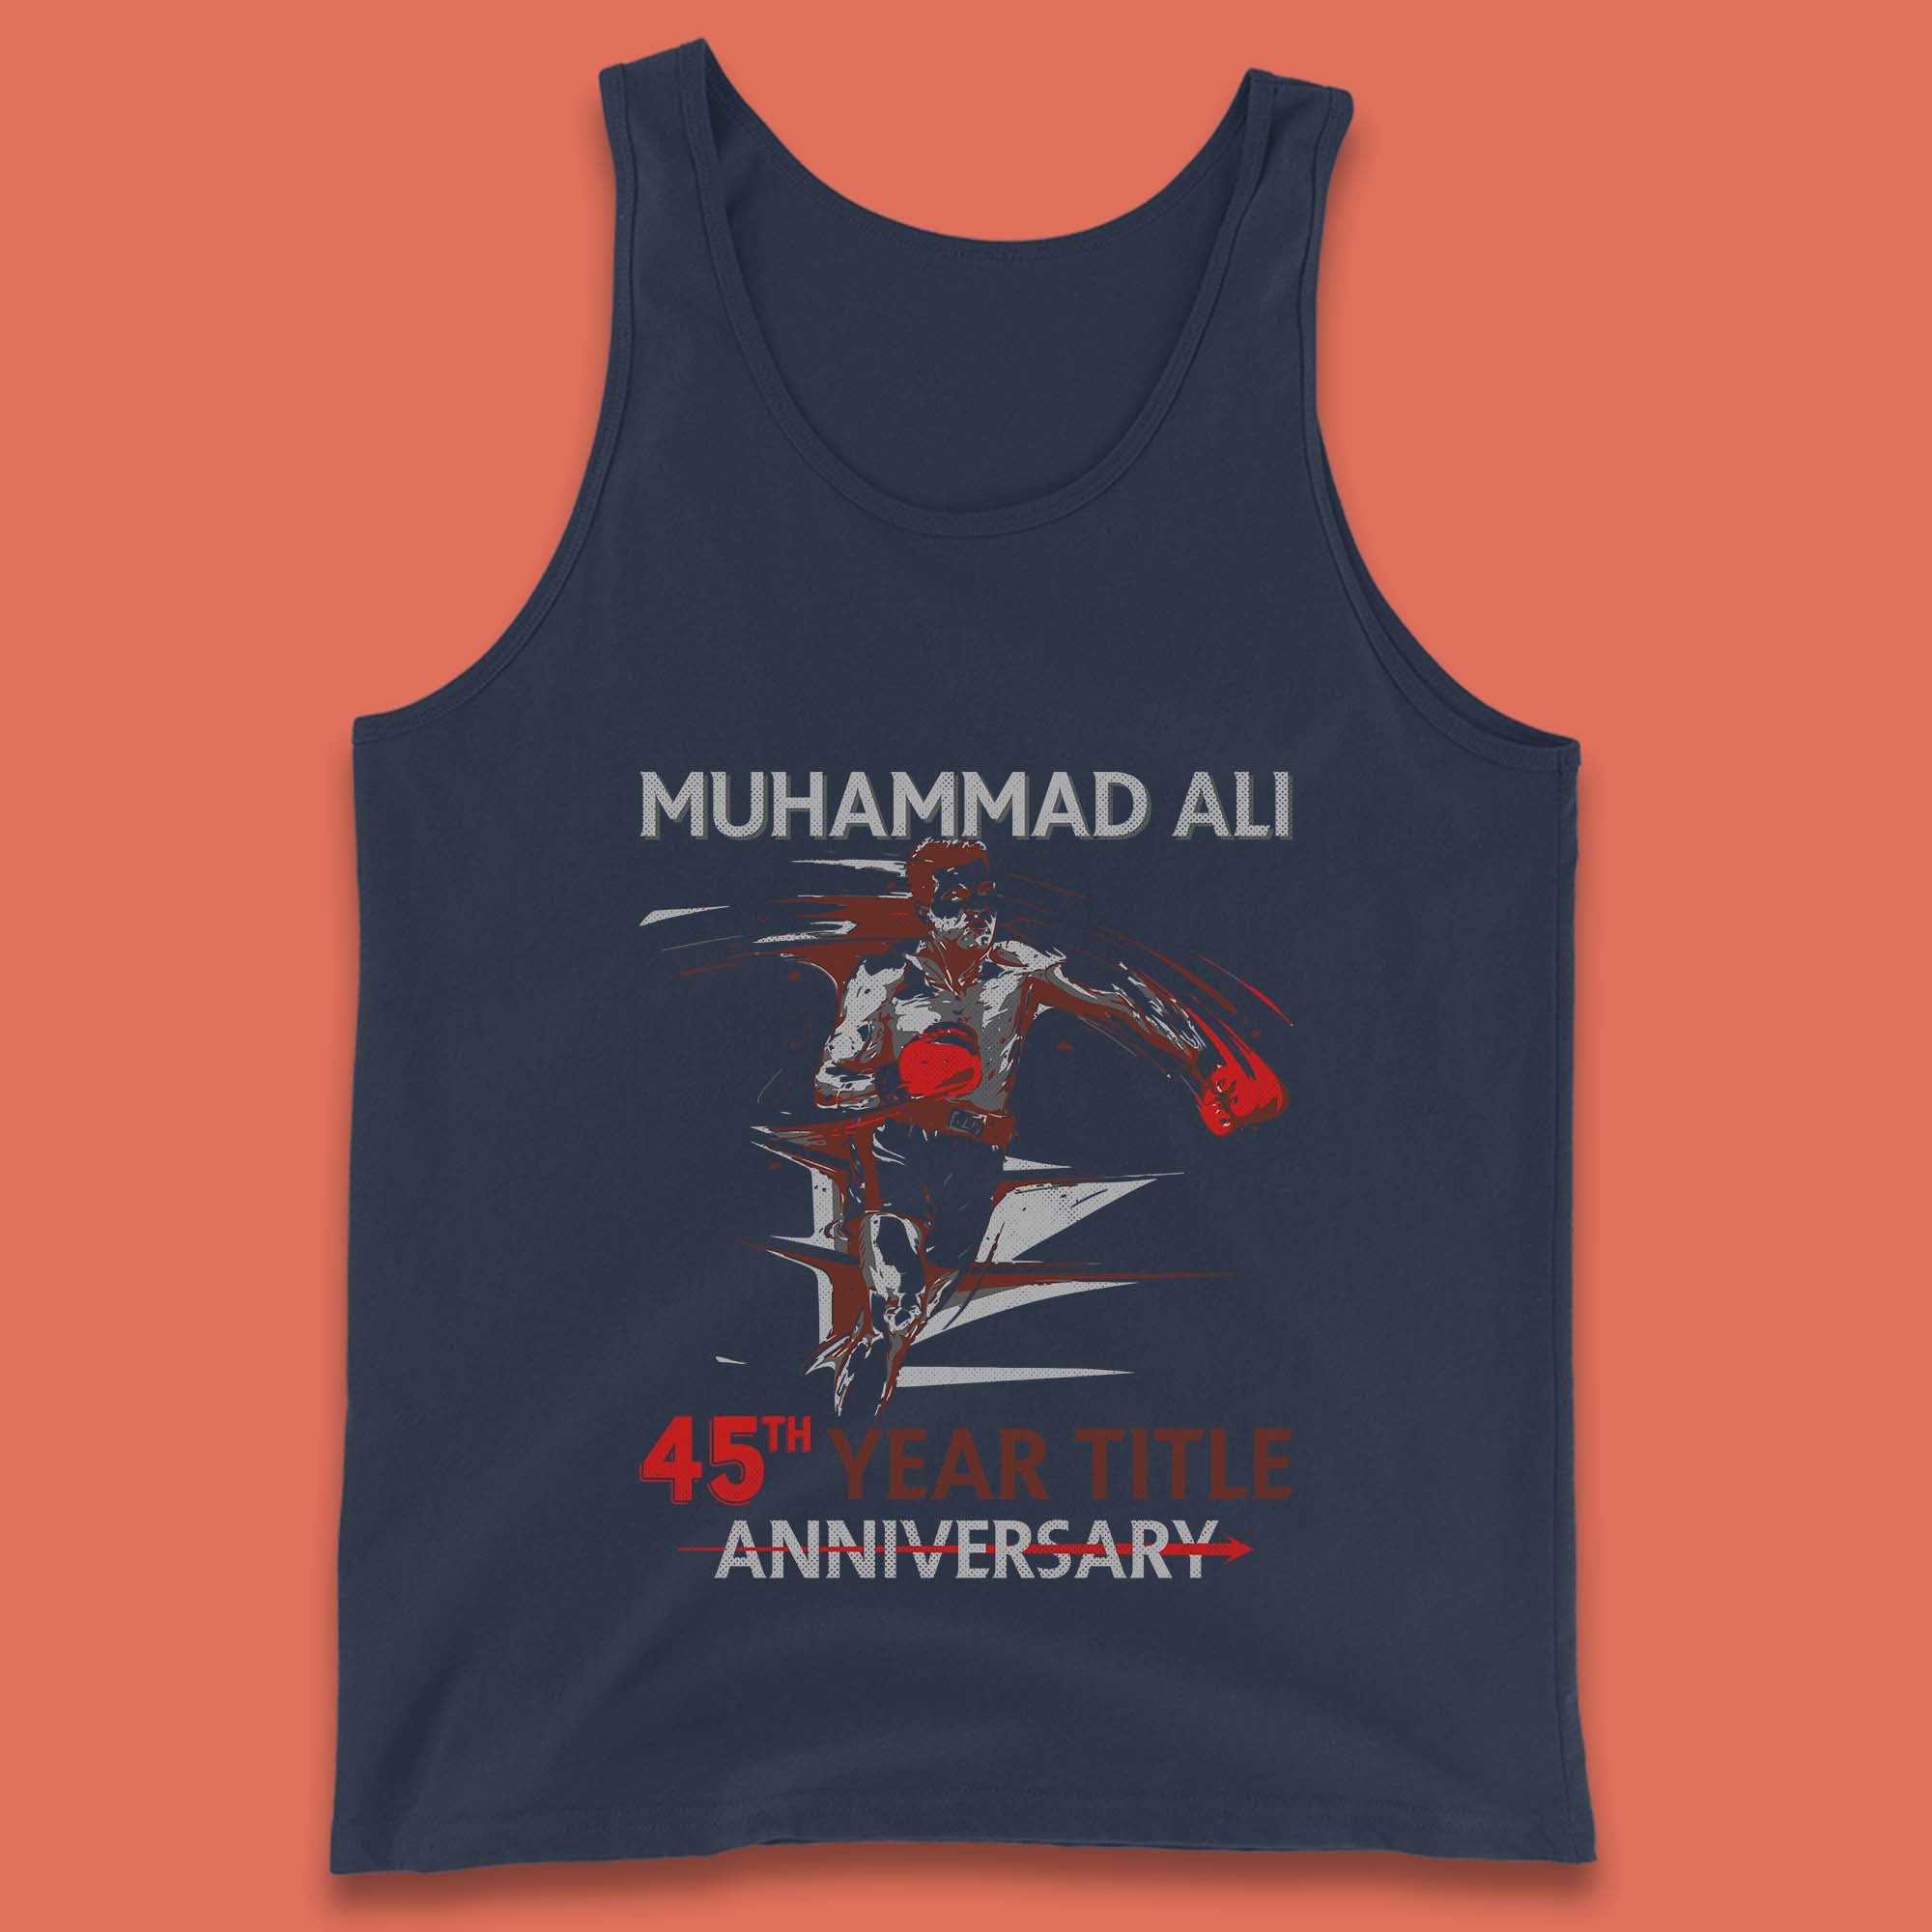 Muhammad Ali 45th Year Title Anniversary World Boxing Champion American Heavyweight Boxer Tank Top